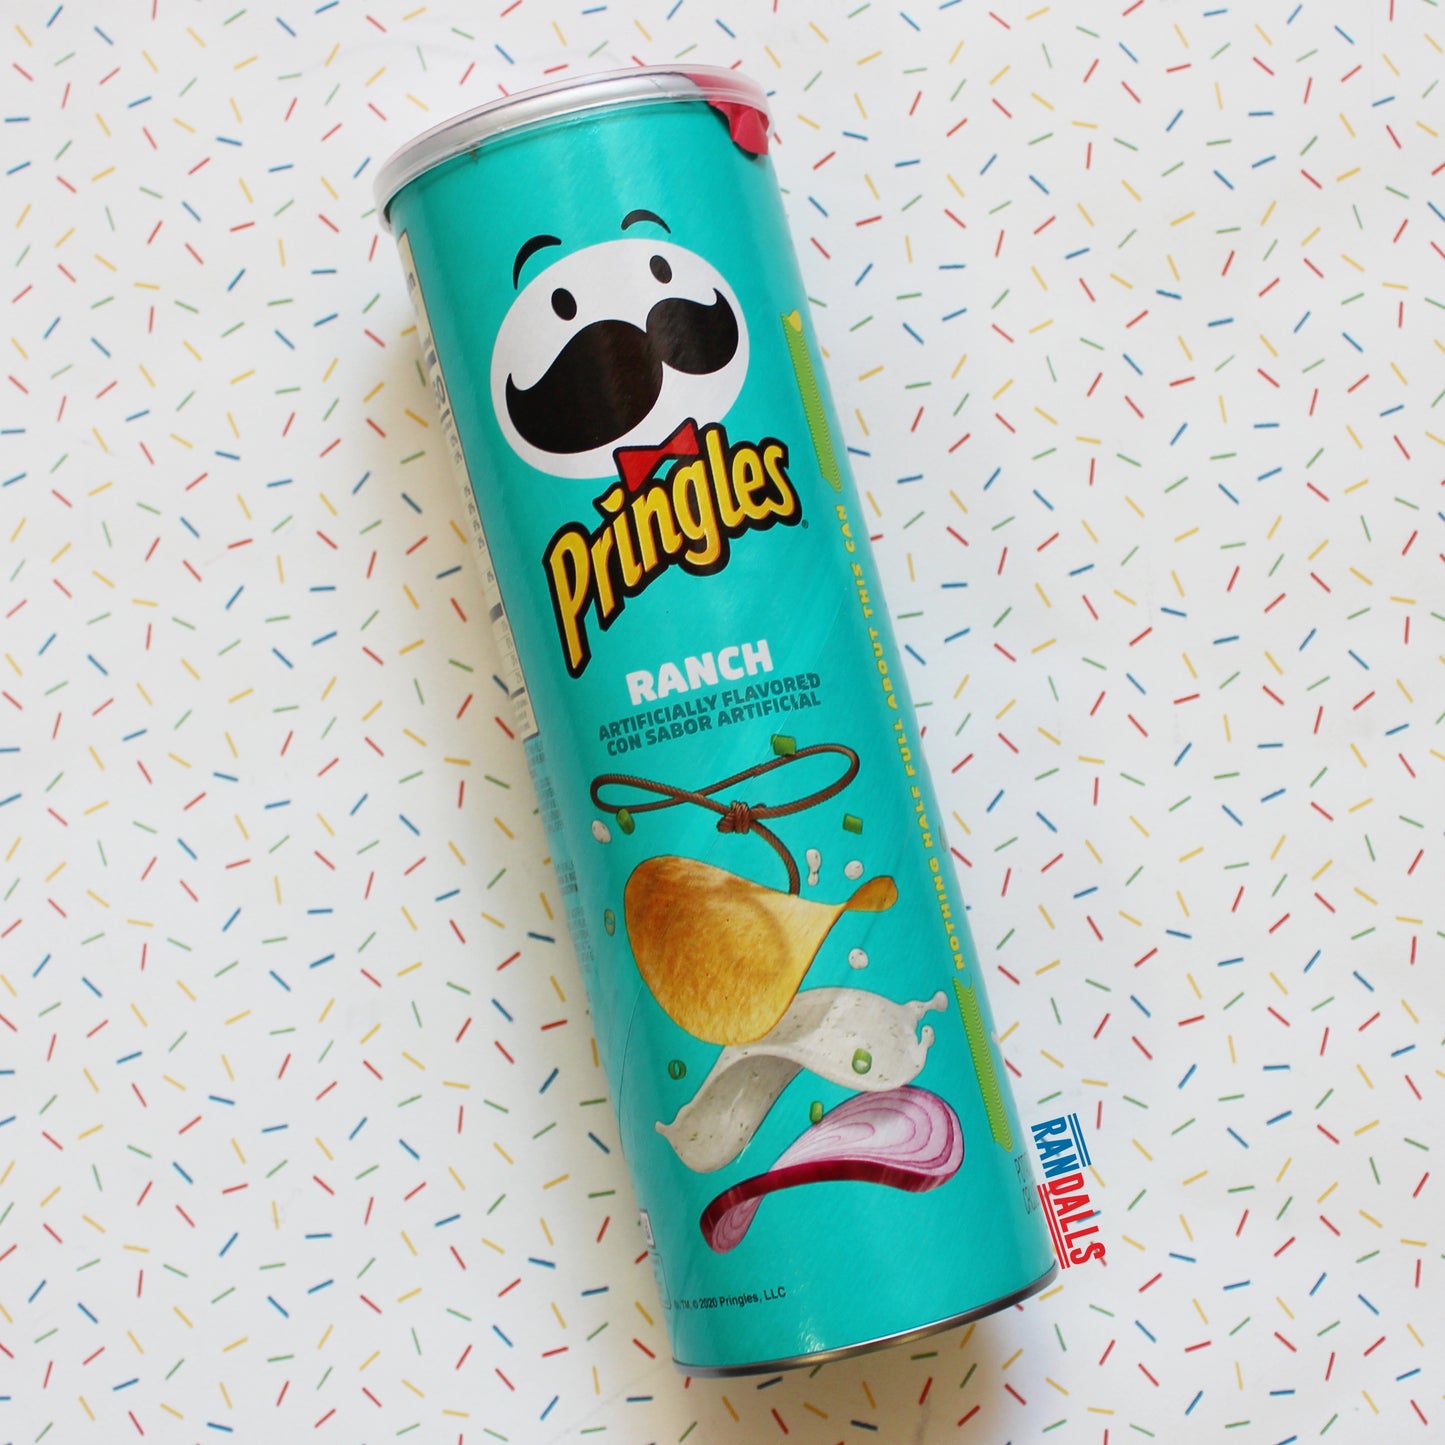 Pringles Ranch Potato Crisps